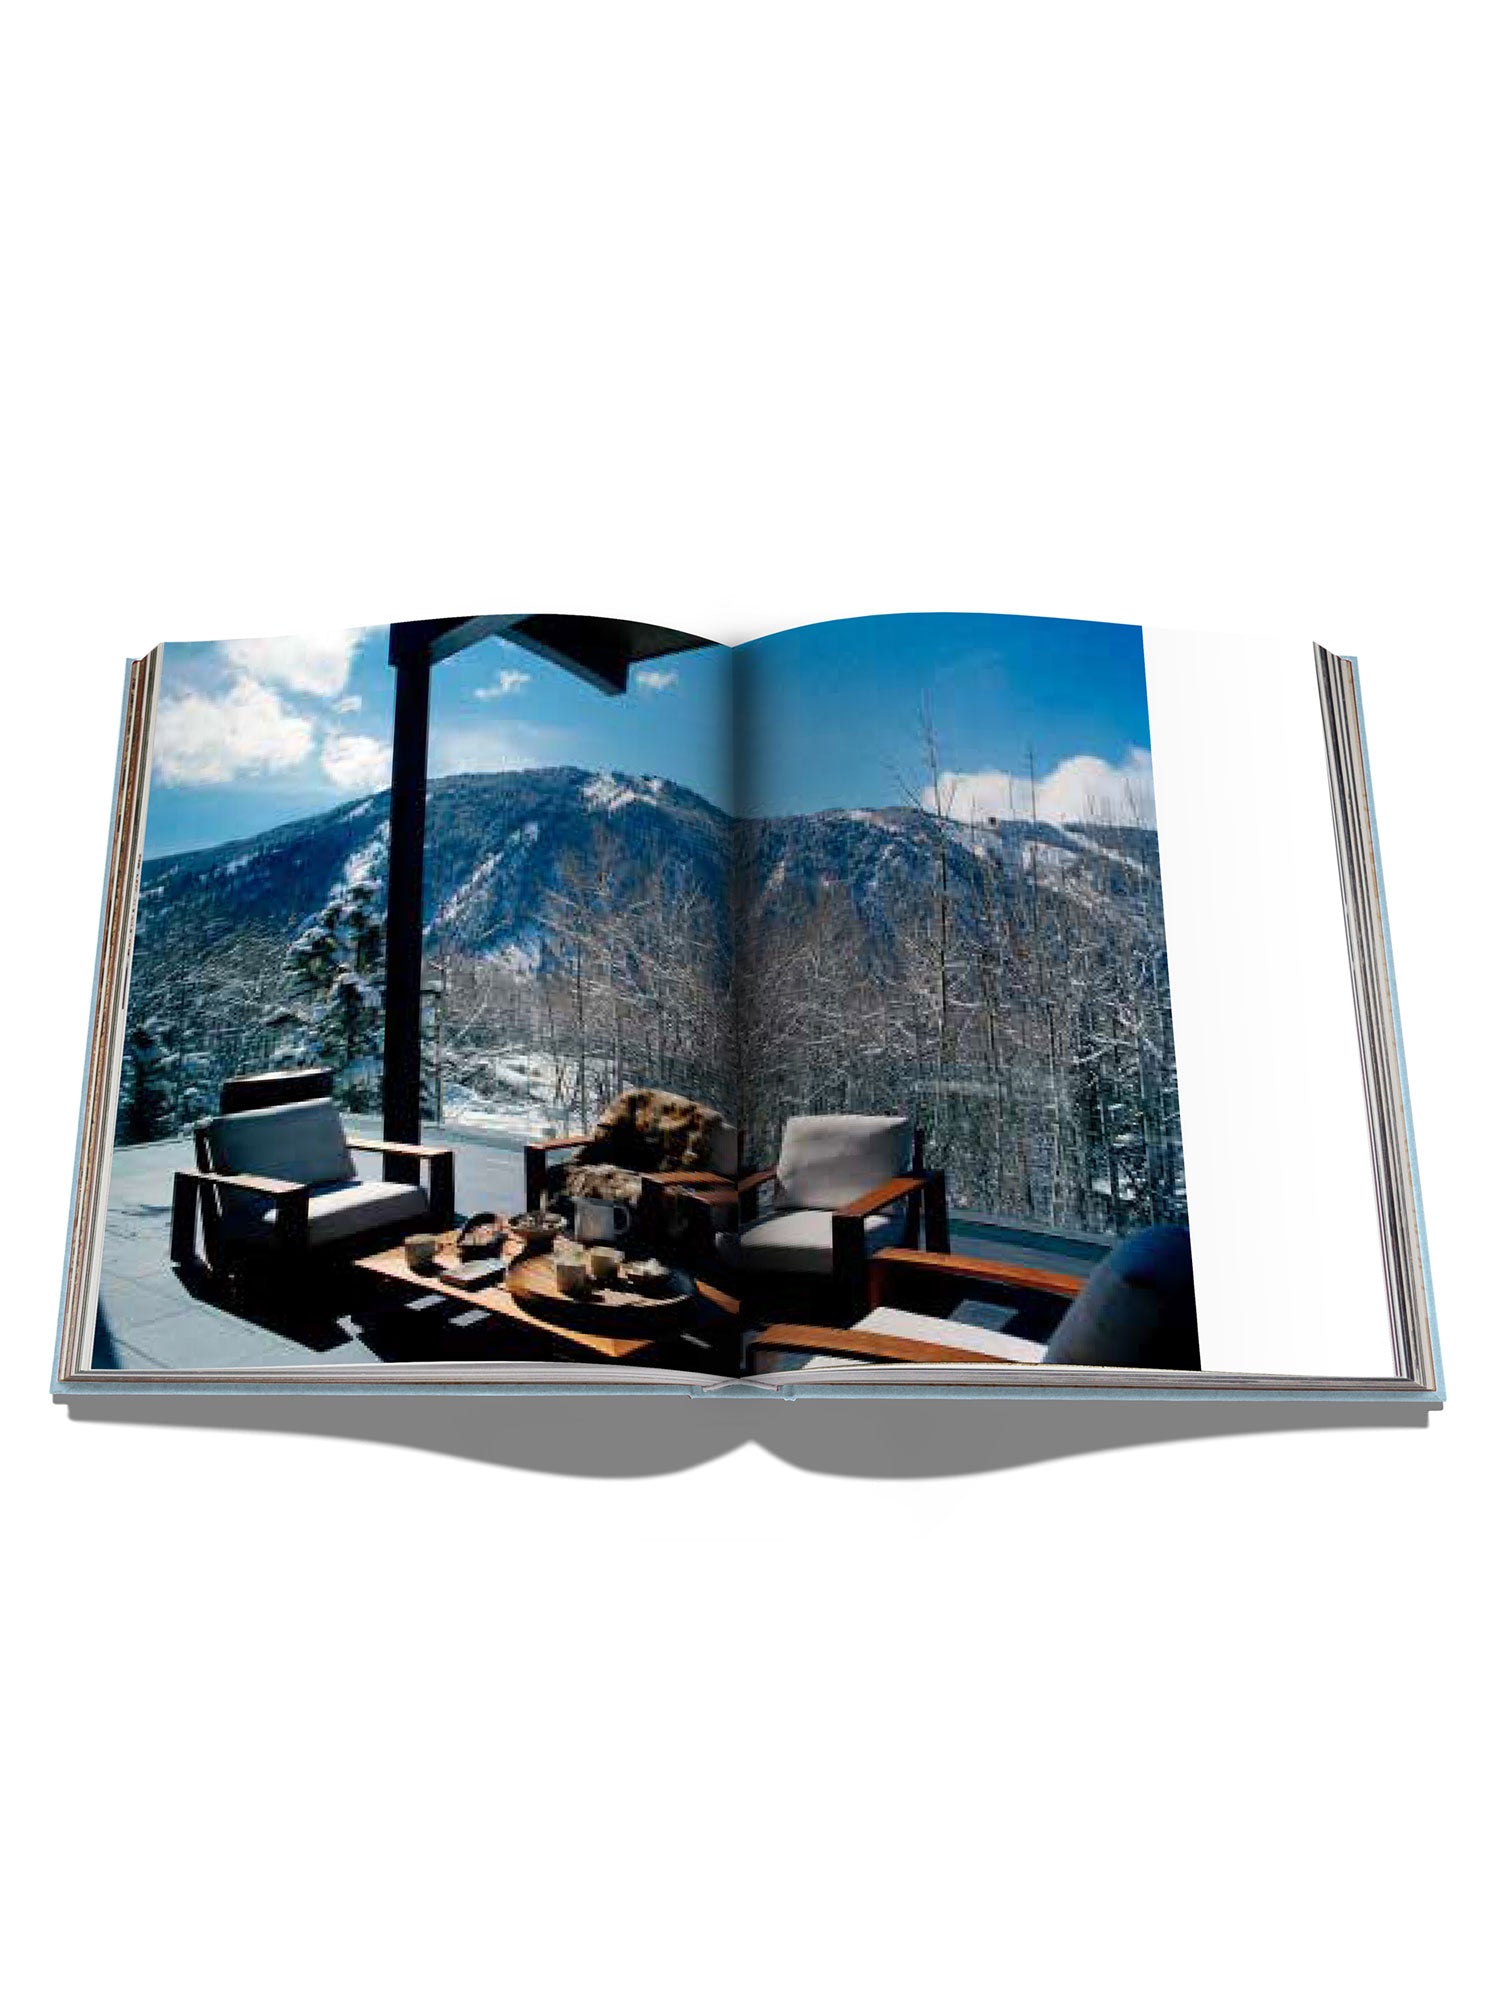 Aspen Style [Book]